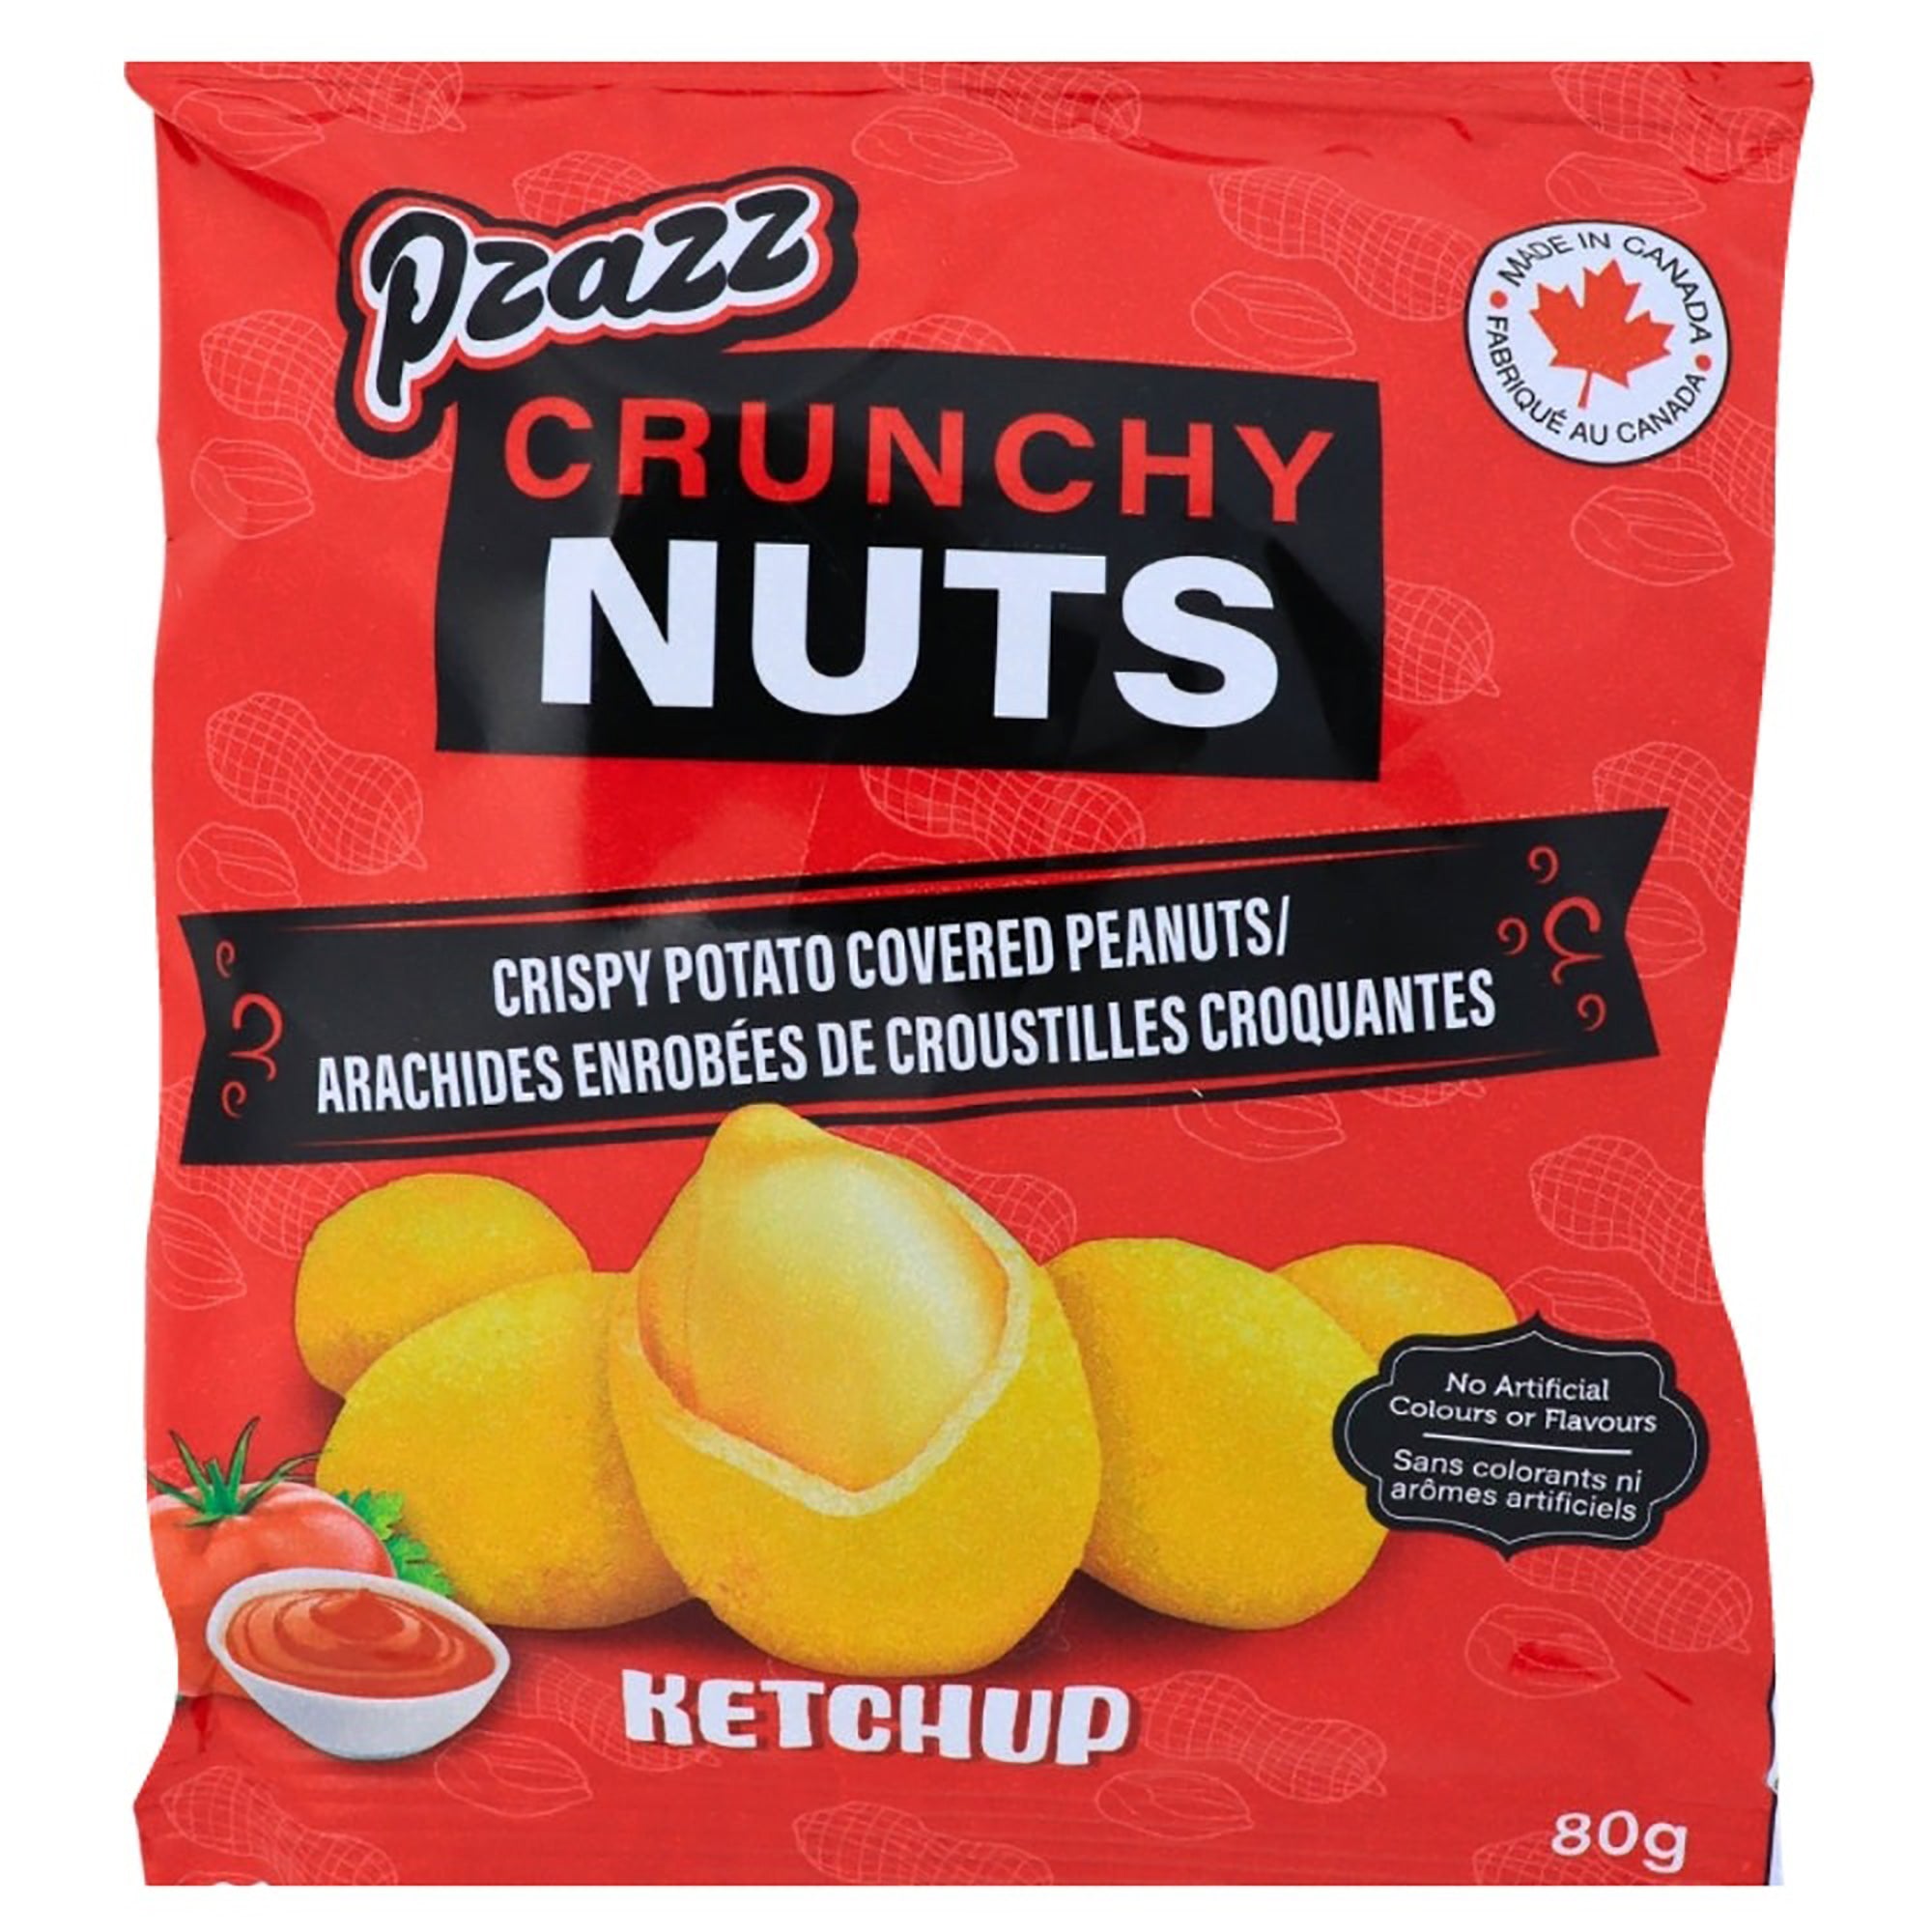 Pzazz Crunchy Nuts, Ketchup, 80 g, 1 Count